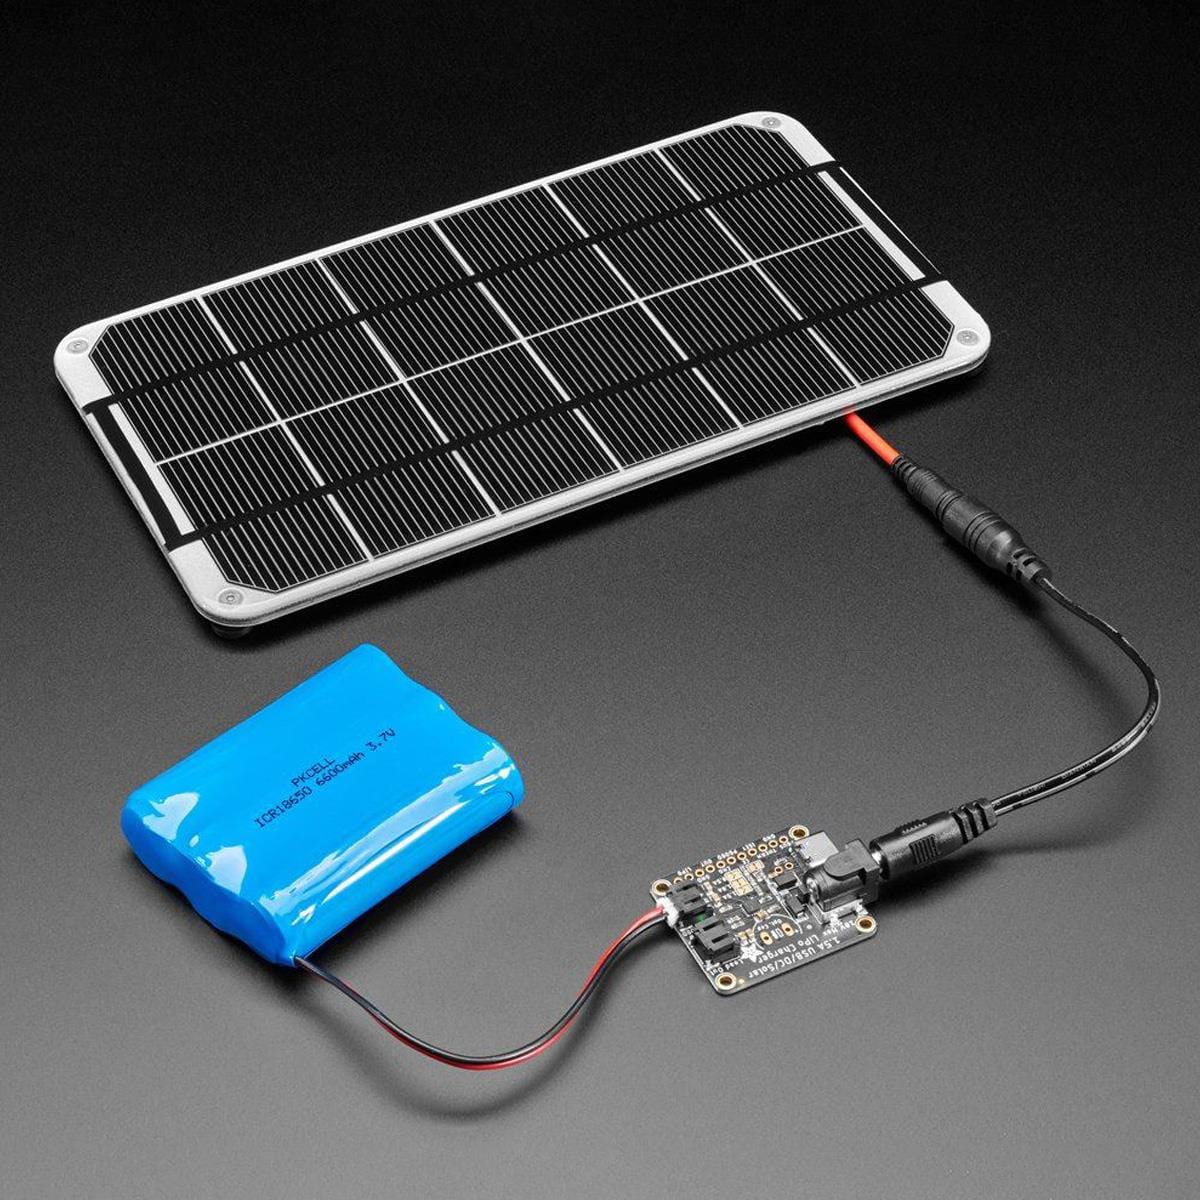 Adafruit Universal USB / DC / Solar Lithium Ion/Polymer Charger (bq24074) - The Pi Hut